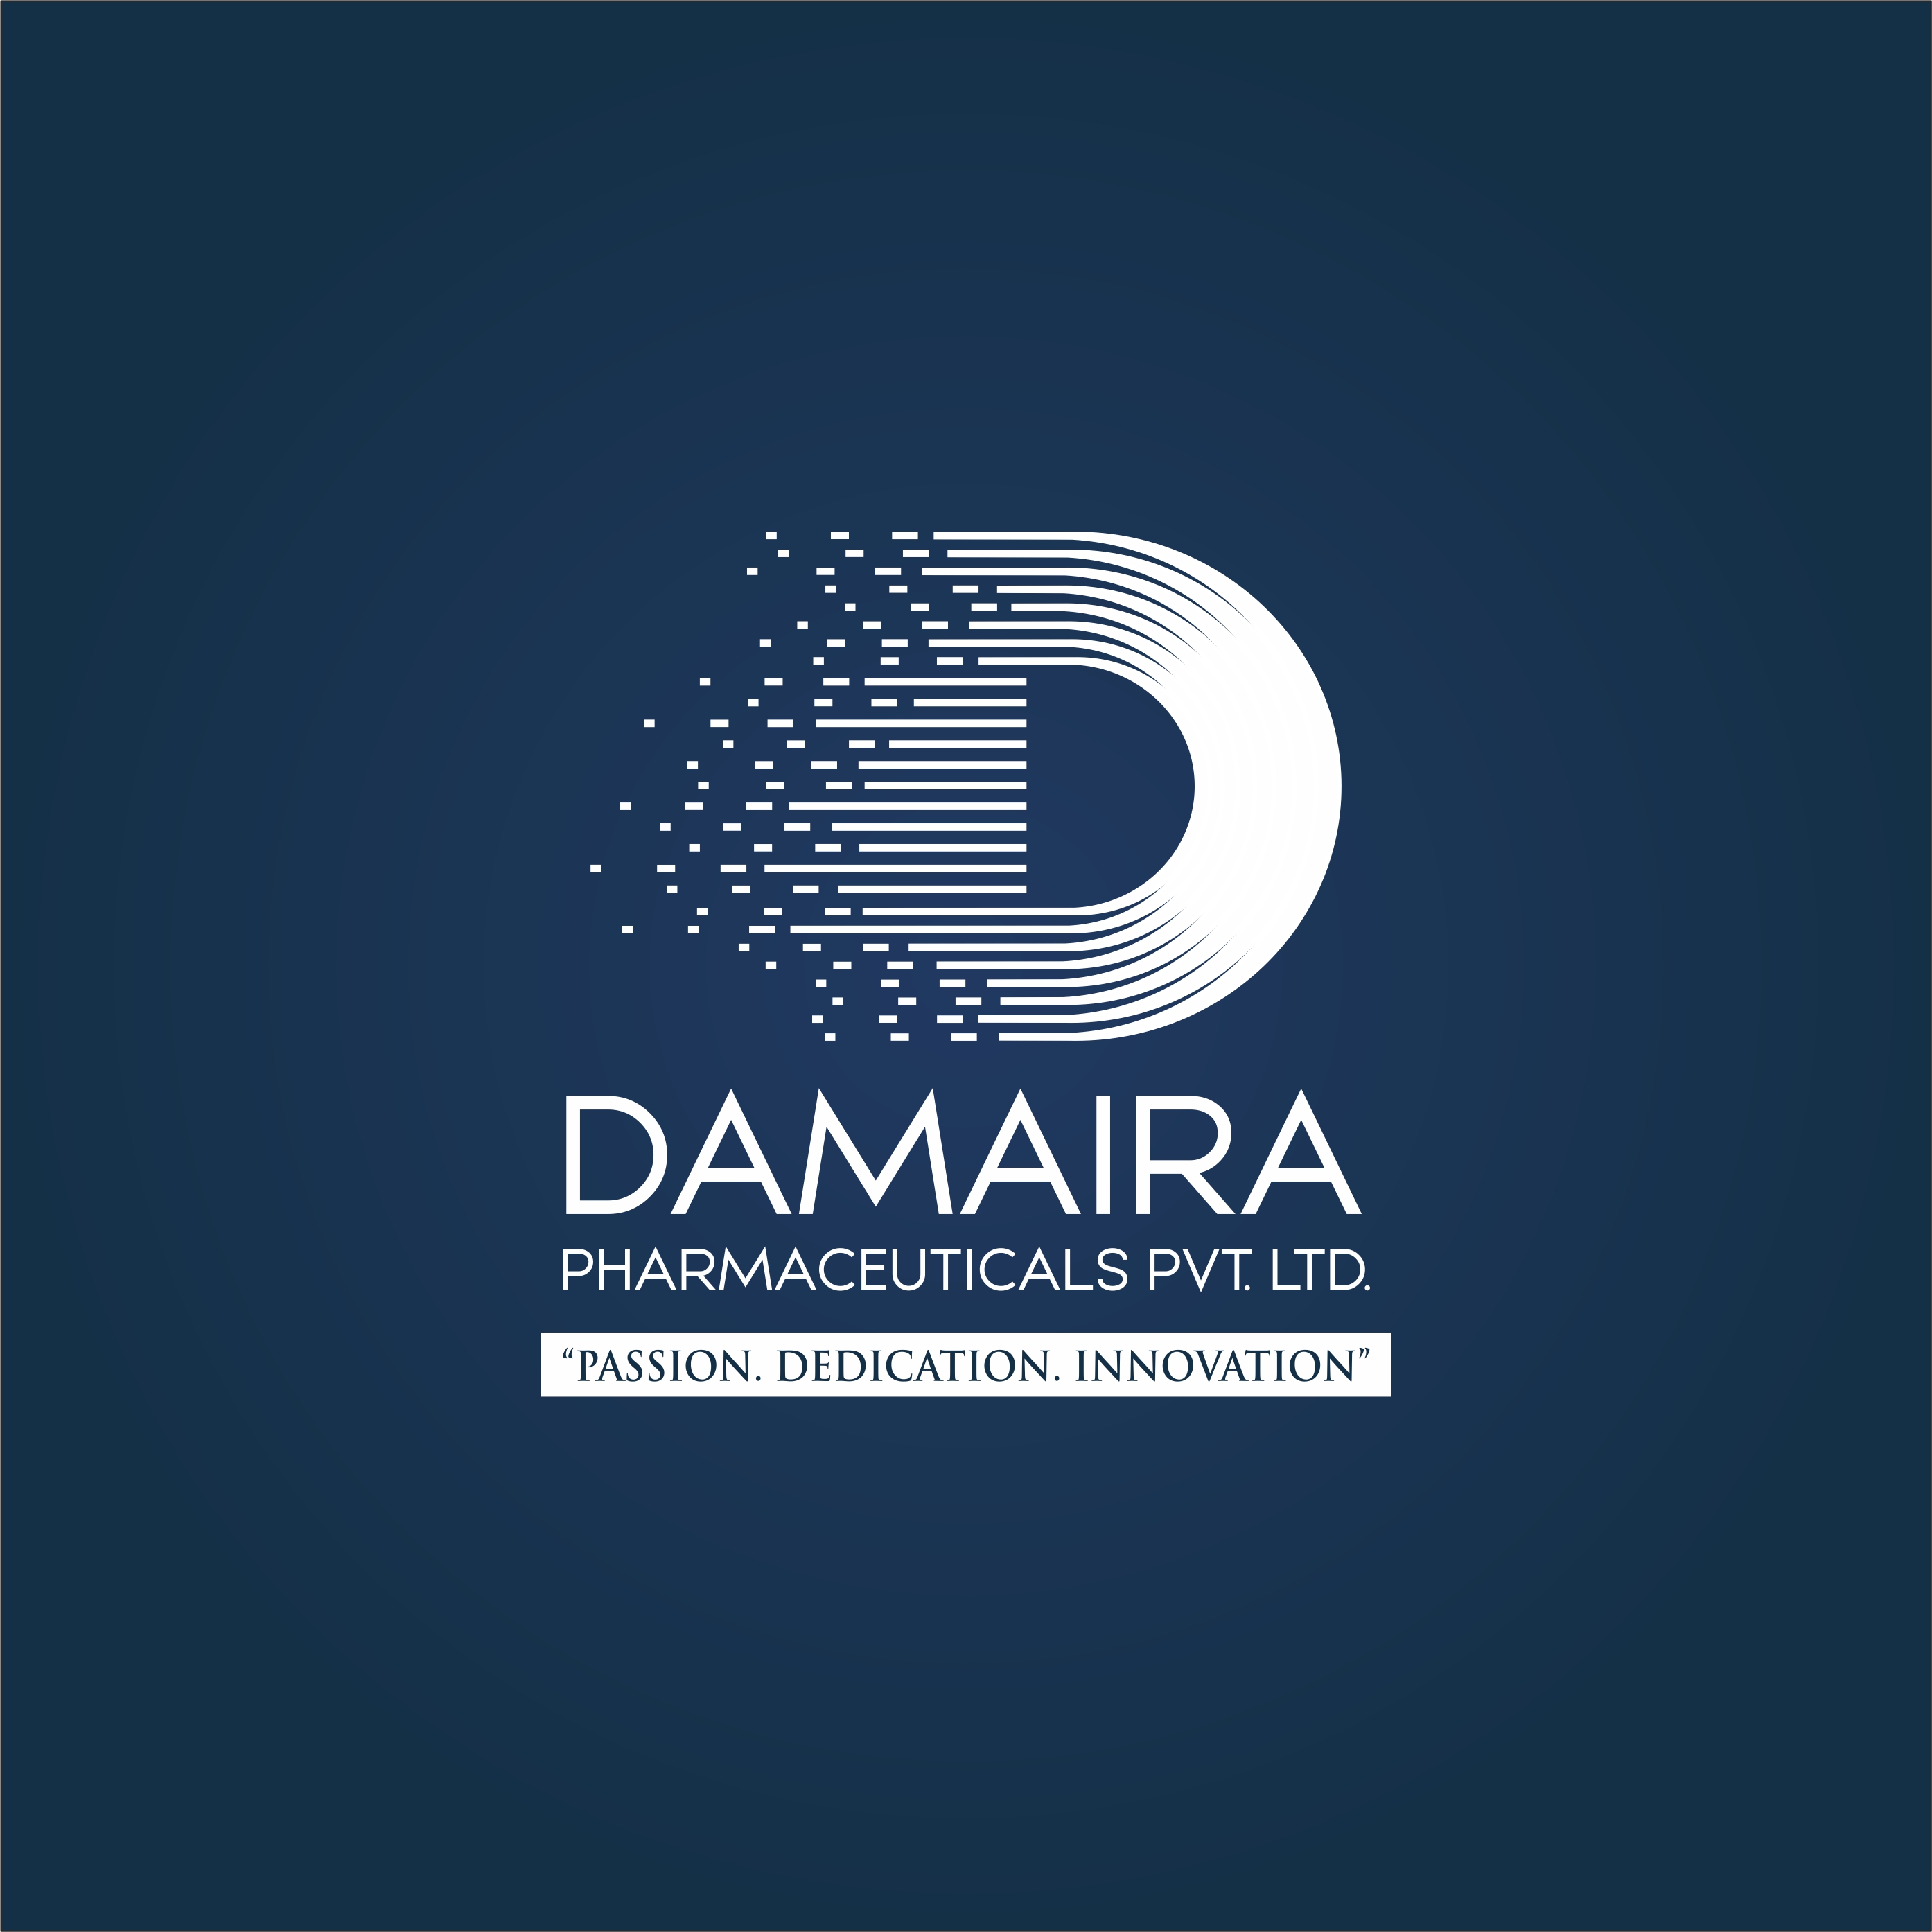 Damaira Pharmaceuticals pvt Ltd